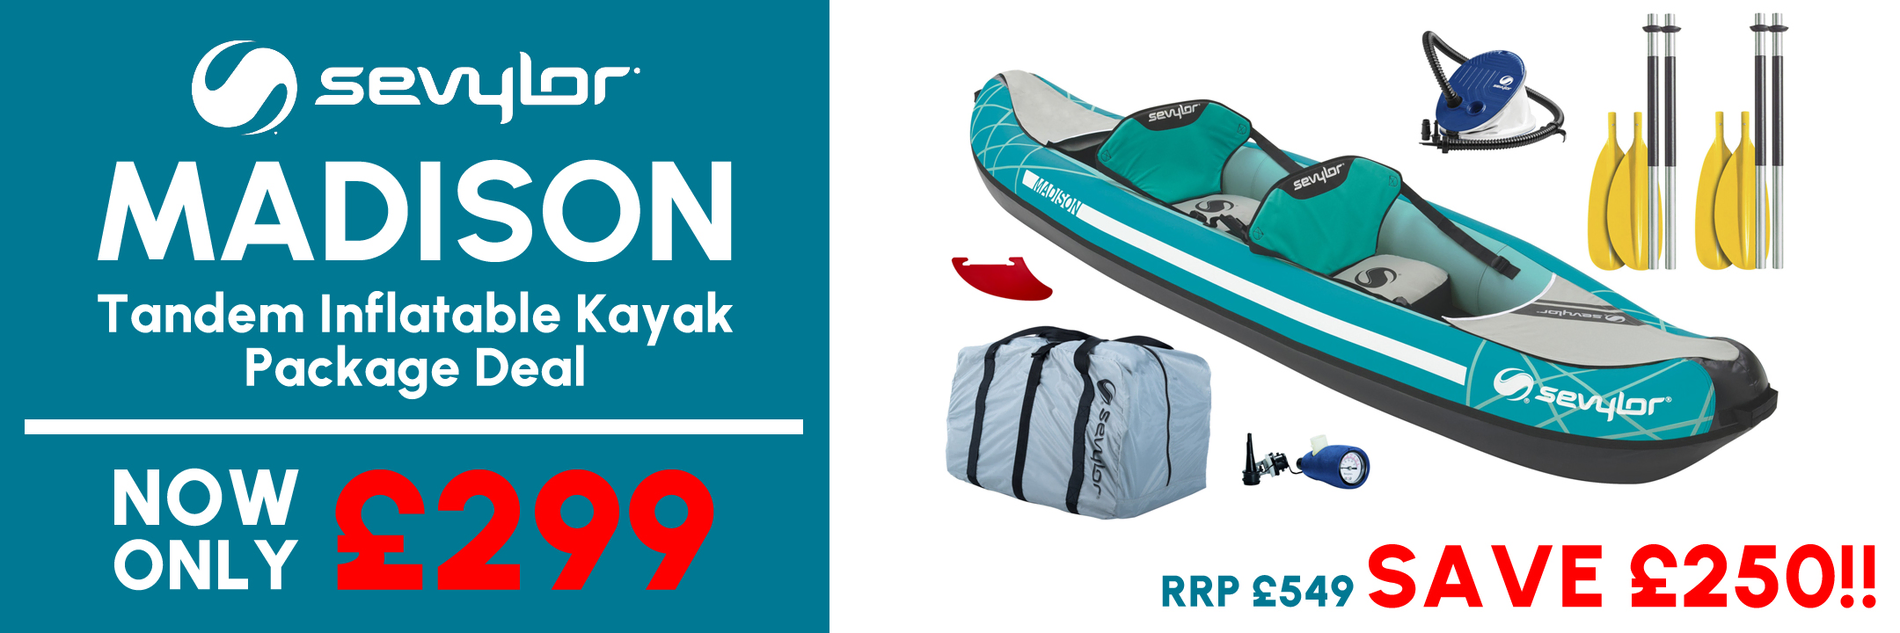 Special Offer - Sevylor Madison Inflatable Kayak Kit